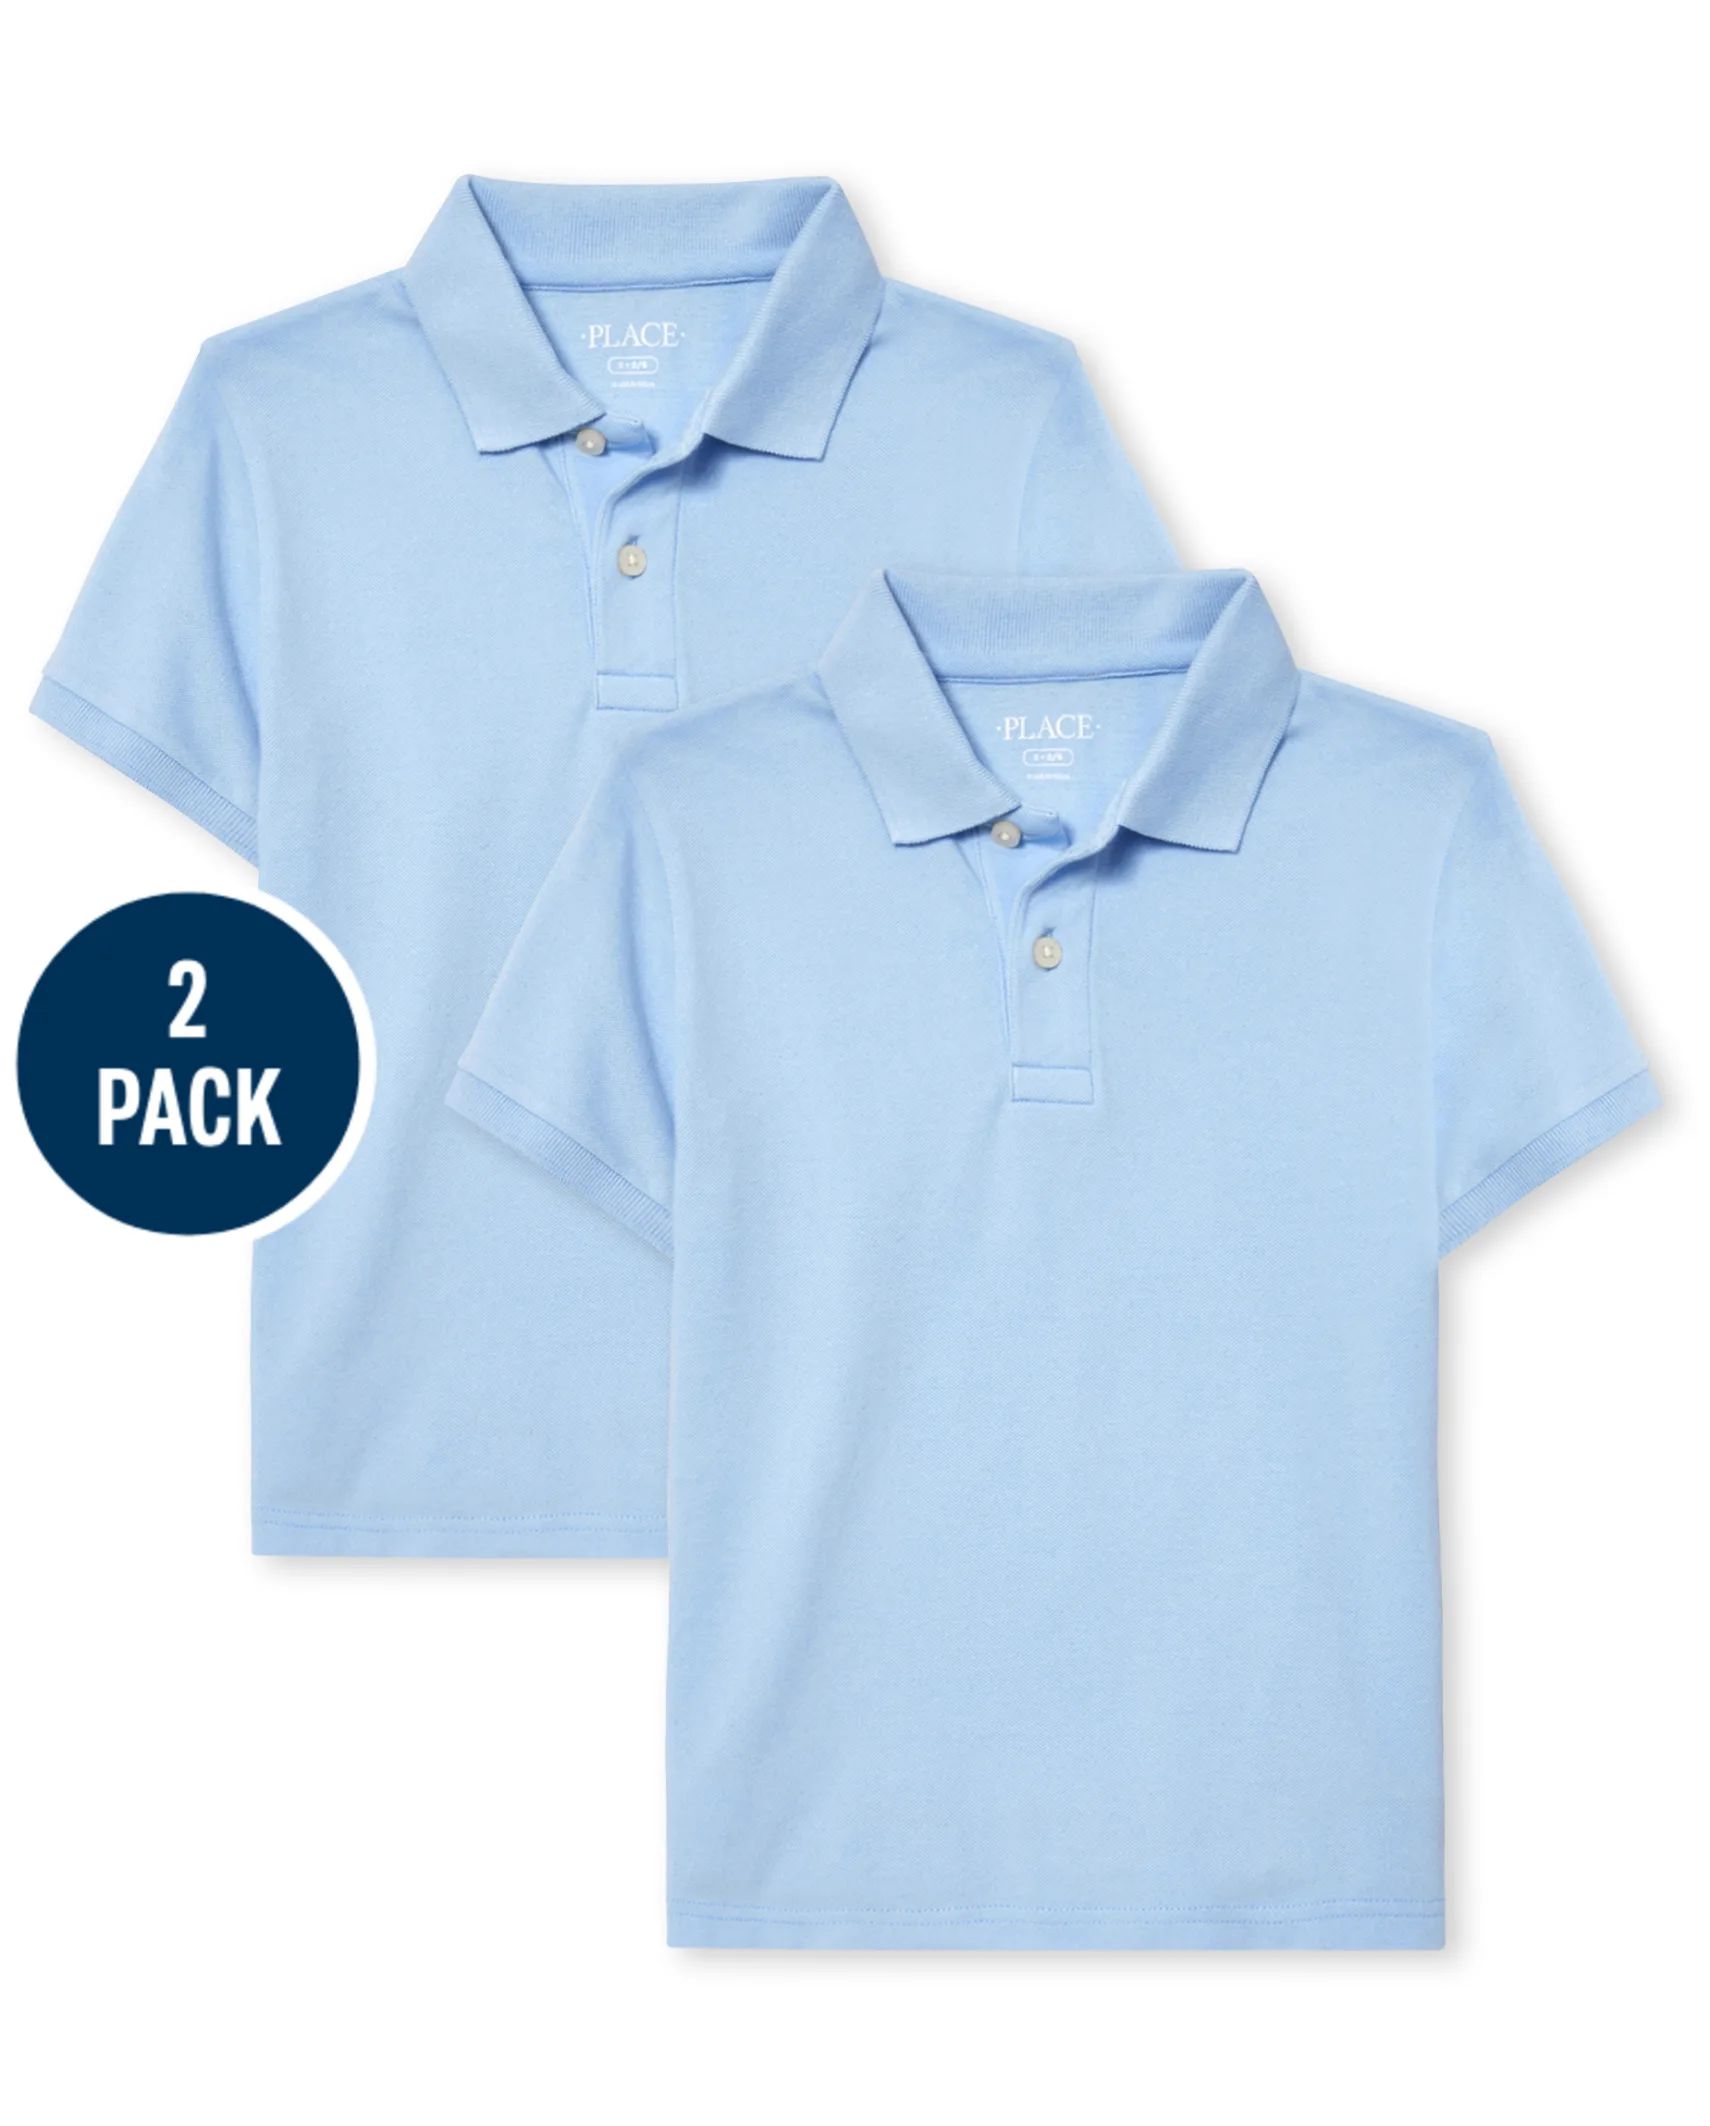 Boys Uniform Short Sleeve Pique Polo 2-Pack | The Children's Place | The Children's Place